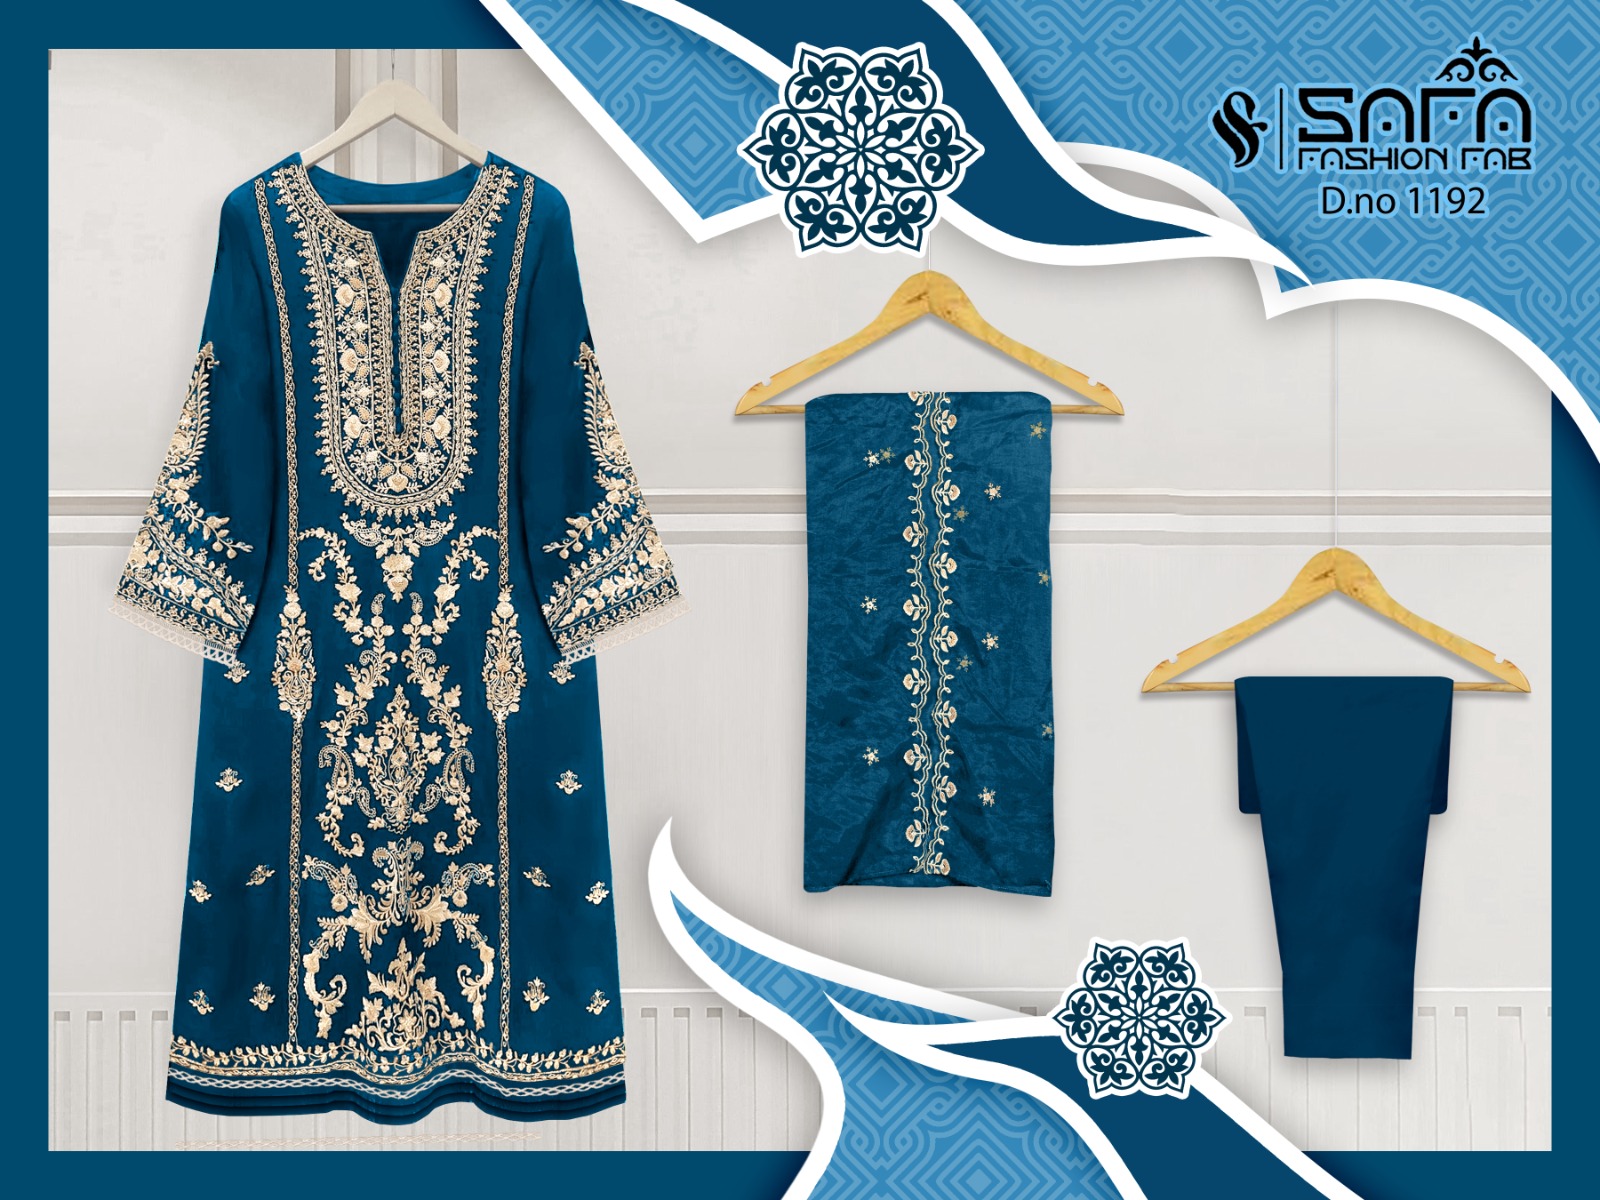 Safa Fashion Fab 1192 collection 3